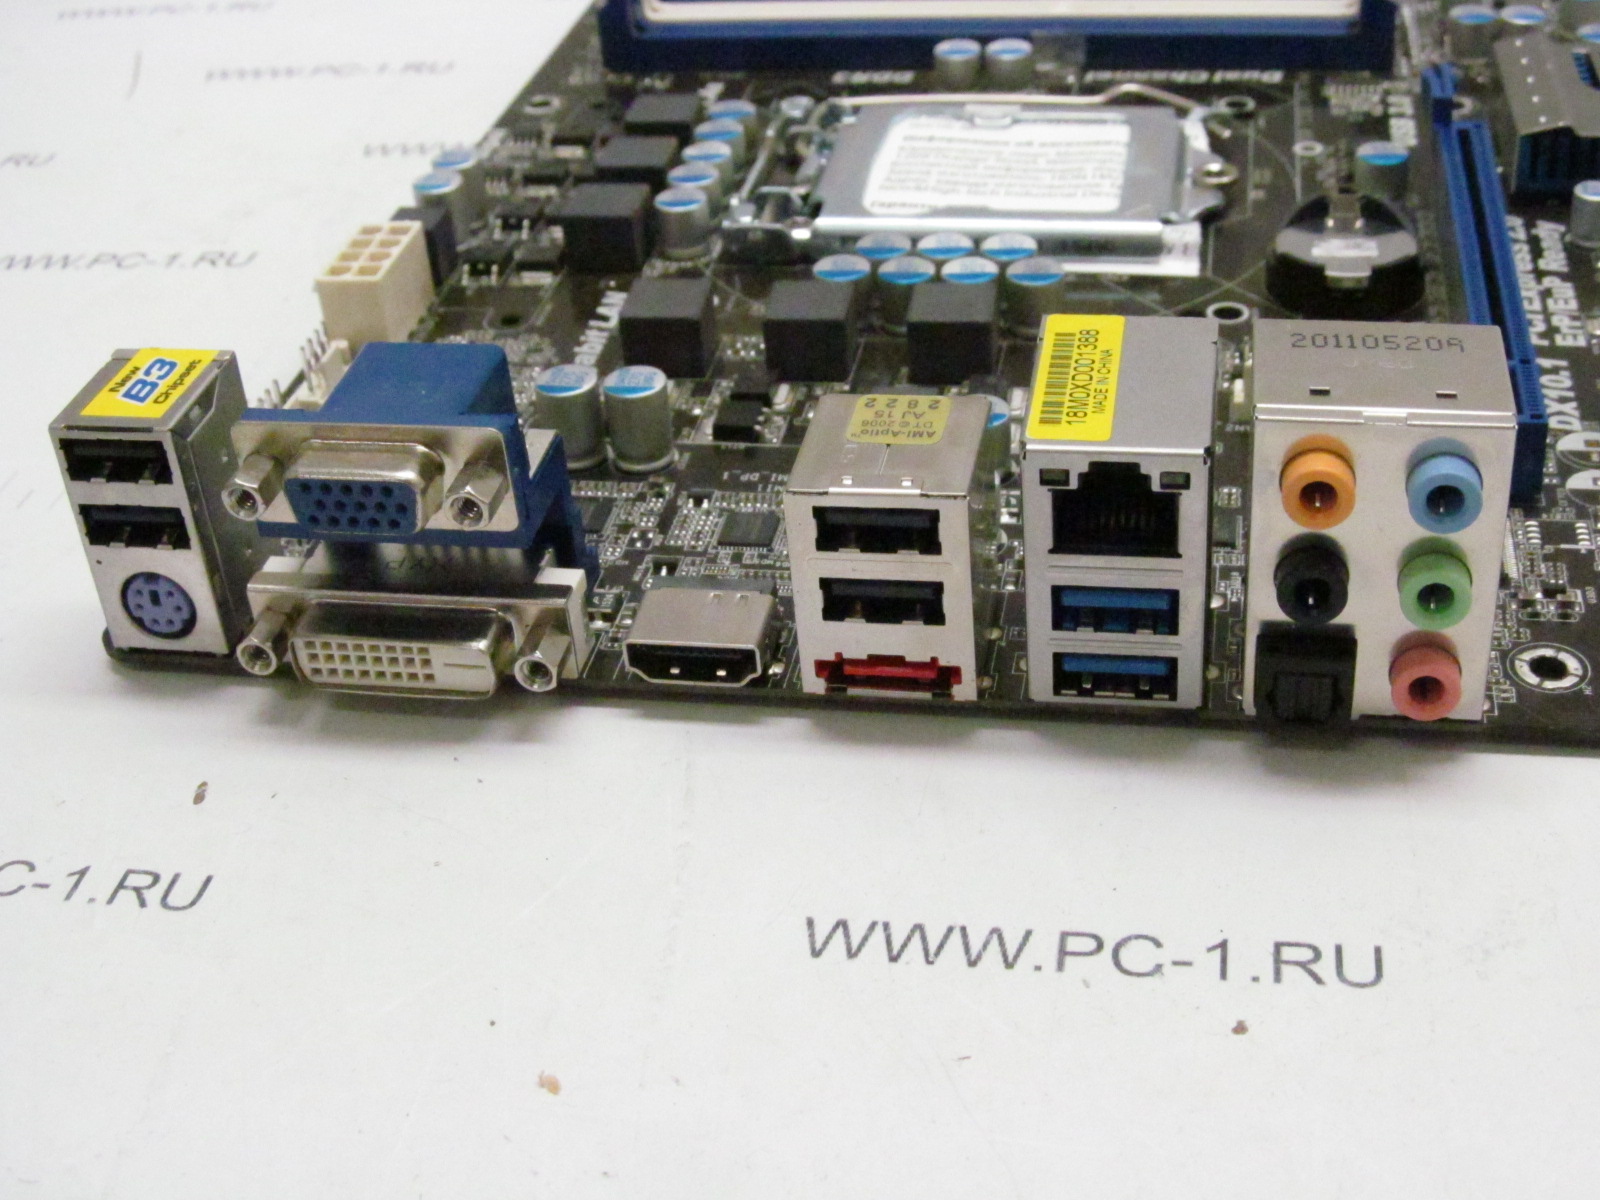 Материнская плата MB ASRock H67M-GE /Socket 1155 /4xDDR3 /PCI-E x16 /PCI /2xPCI-E x1 /5xSATA (2x SATA-III 6Gb/s) /6xUSB (2xUSB 3.0) /HDMI /DVI /VGA /LAN /mATX /Заглушка